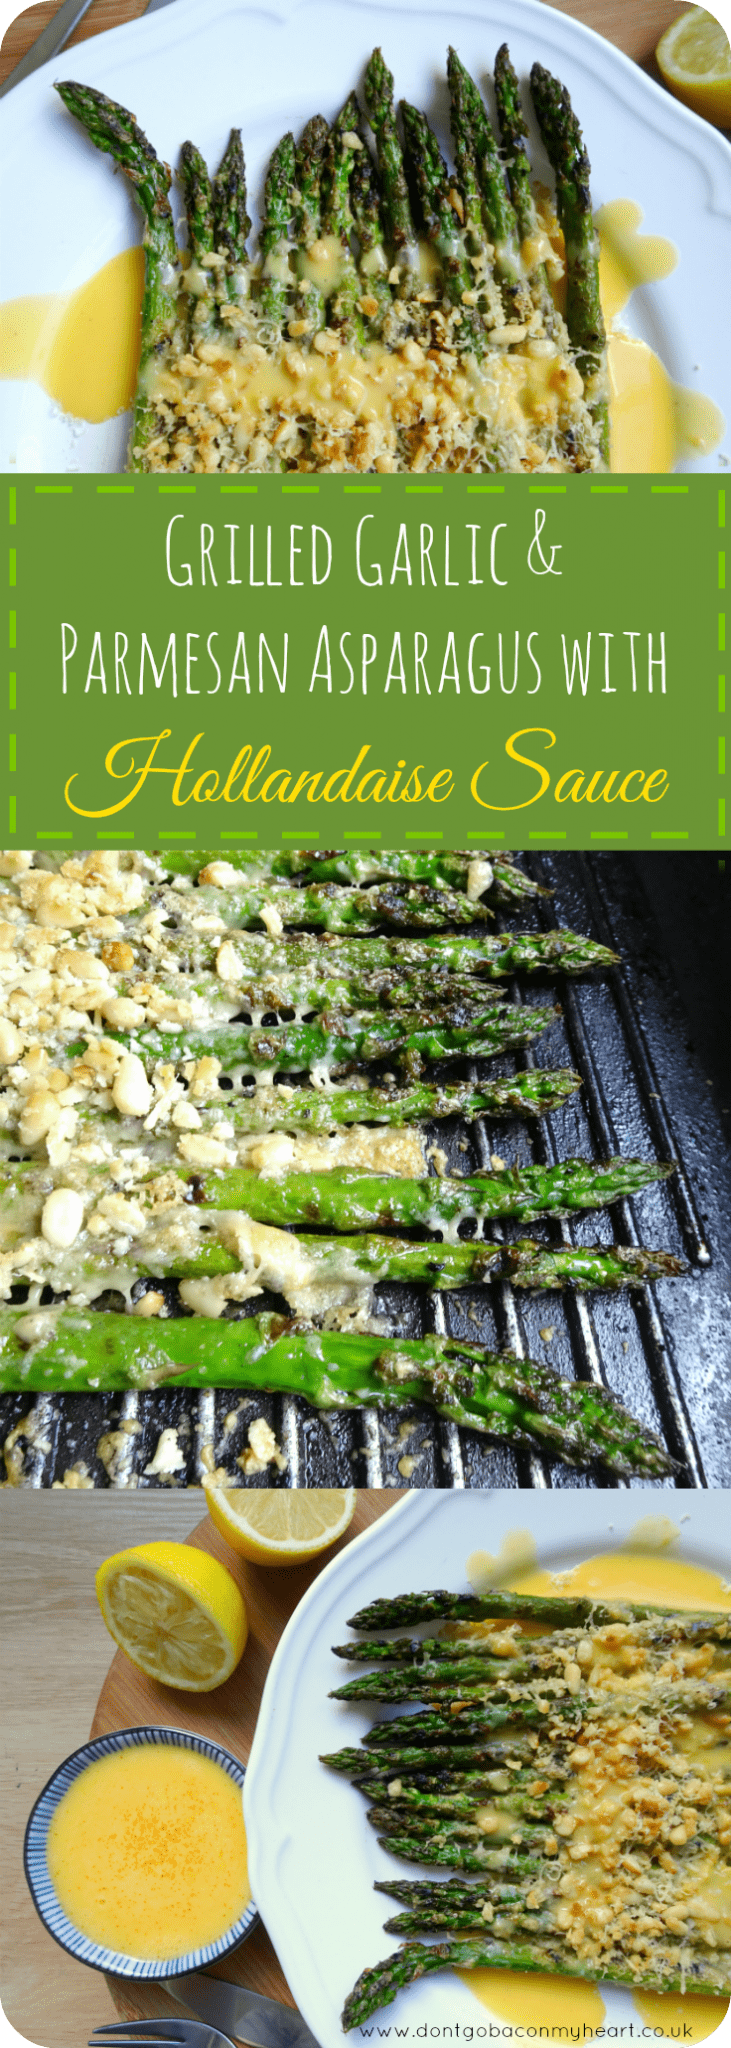 Grilled Garlic & Parmesan Asparagus with Hollandaise Sauce